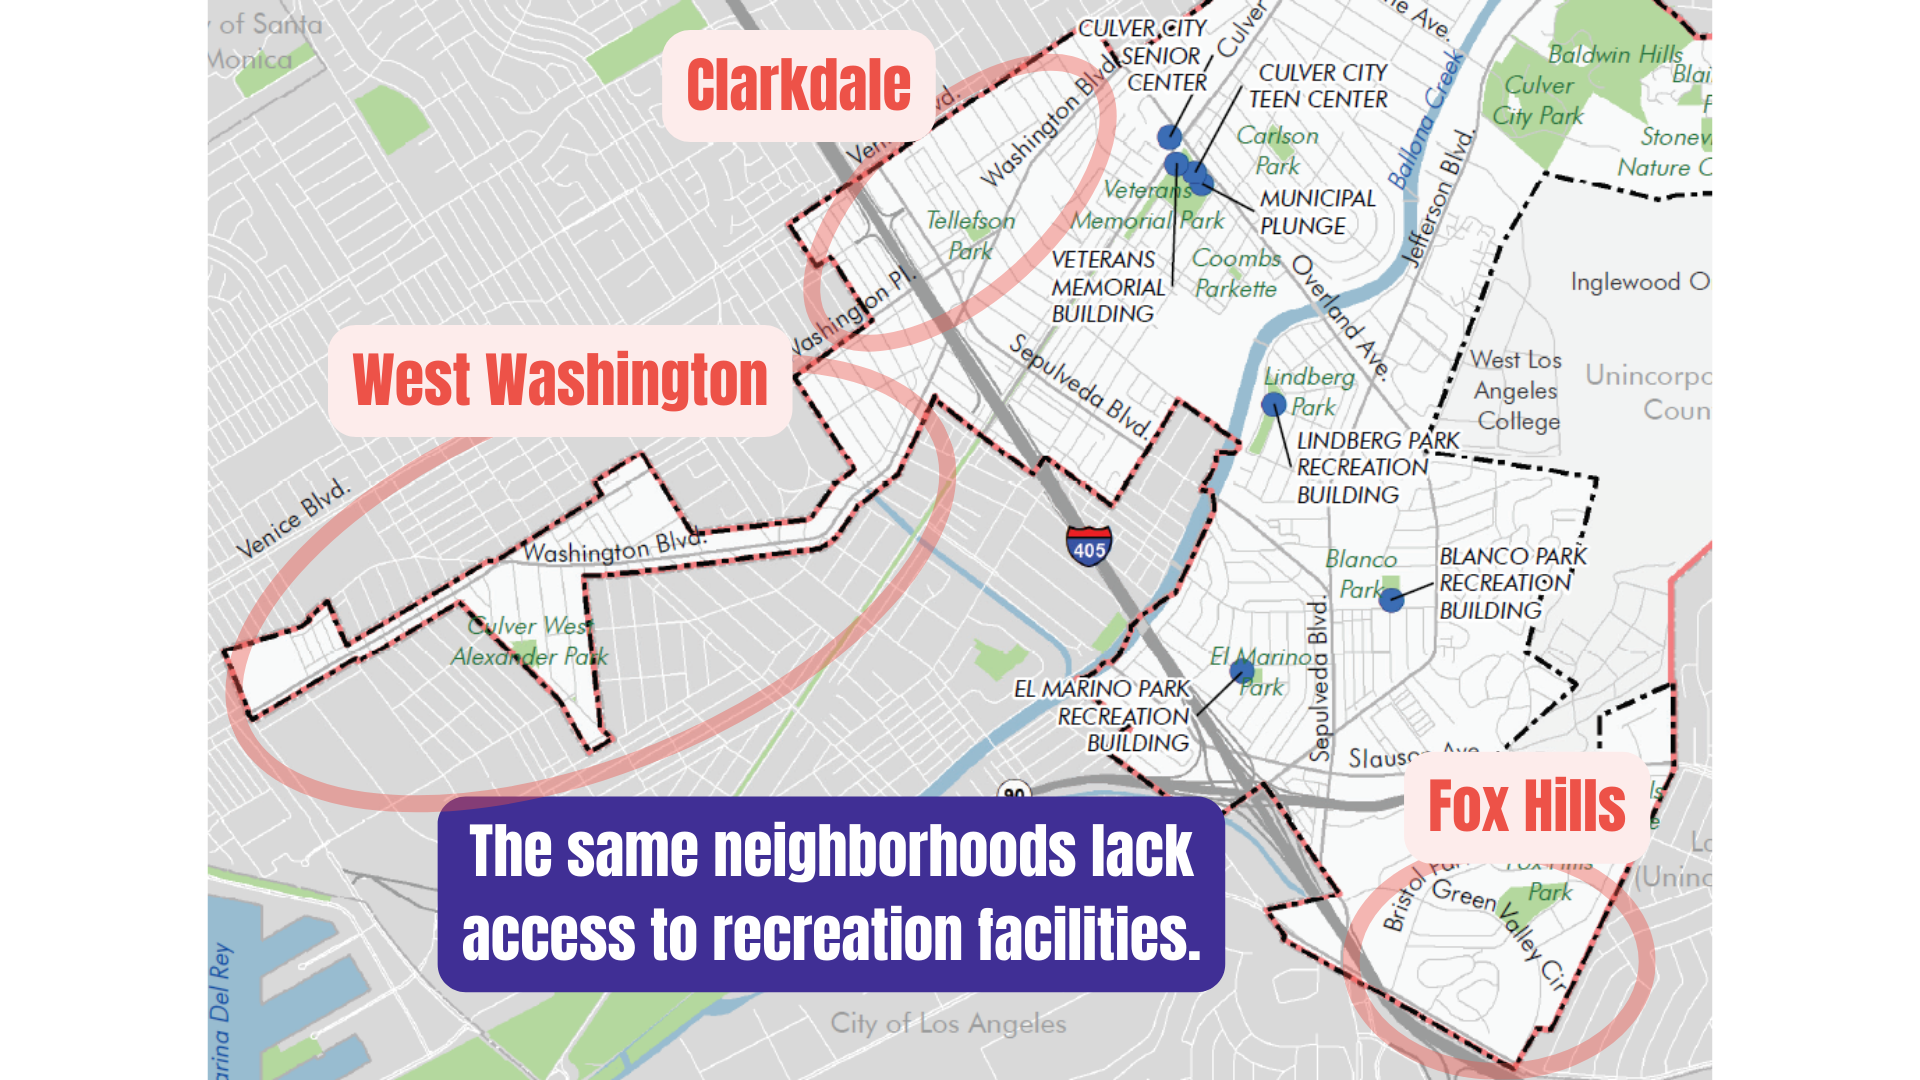  The same neighborhoods lack access to recreation facilities. 